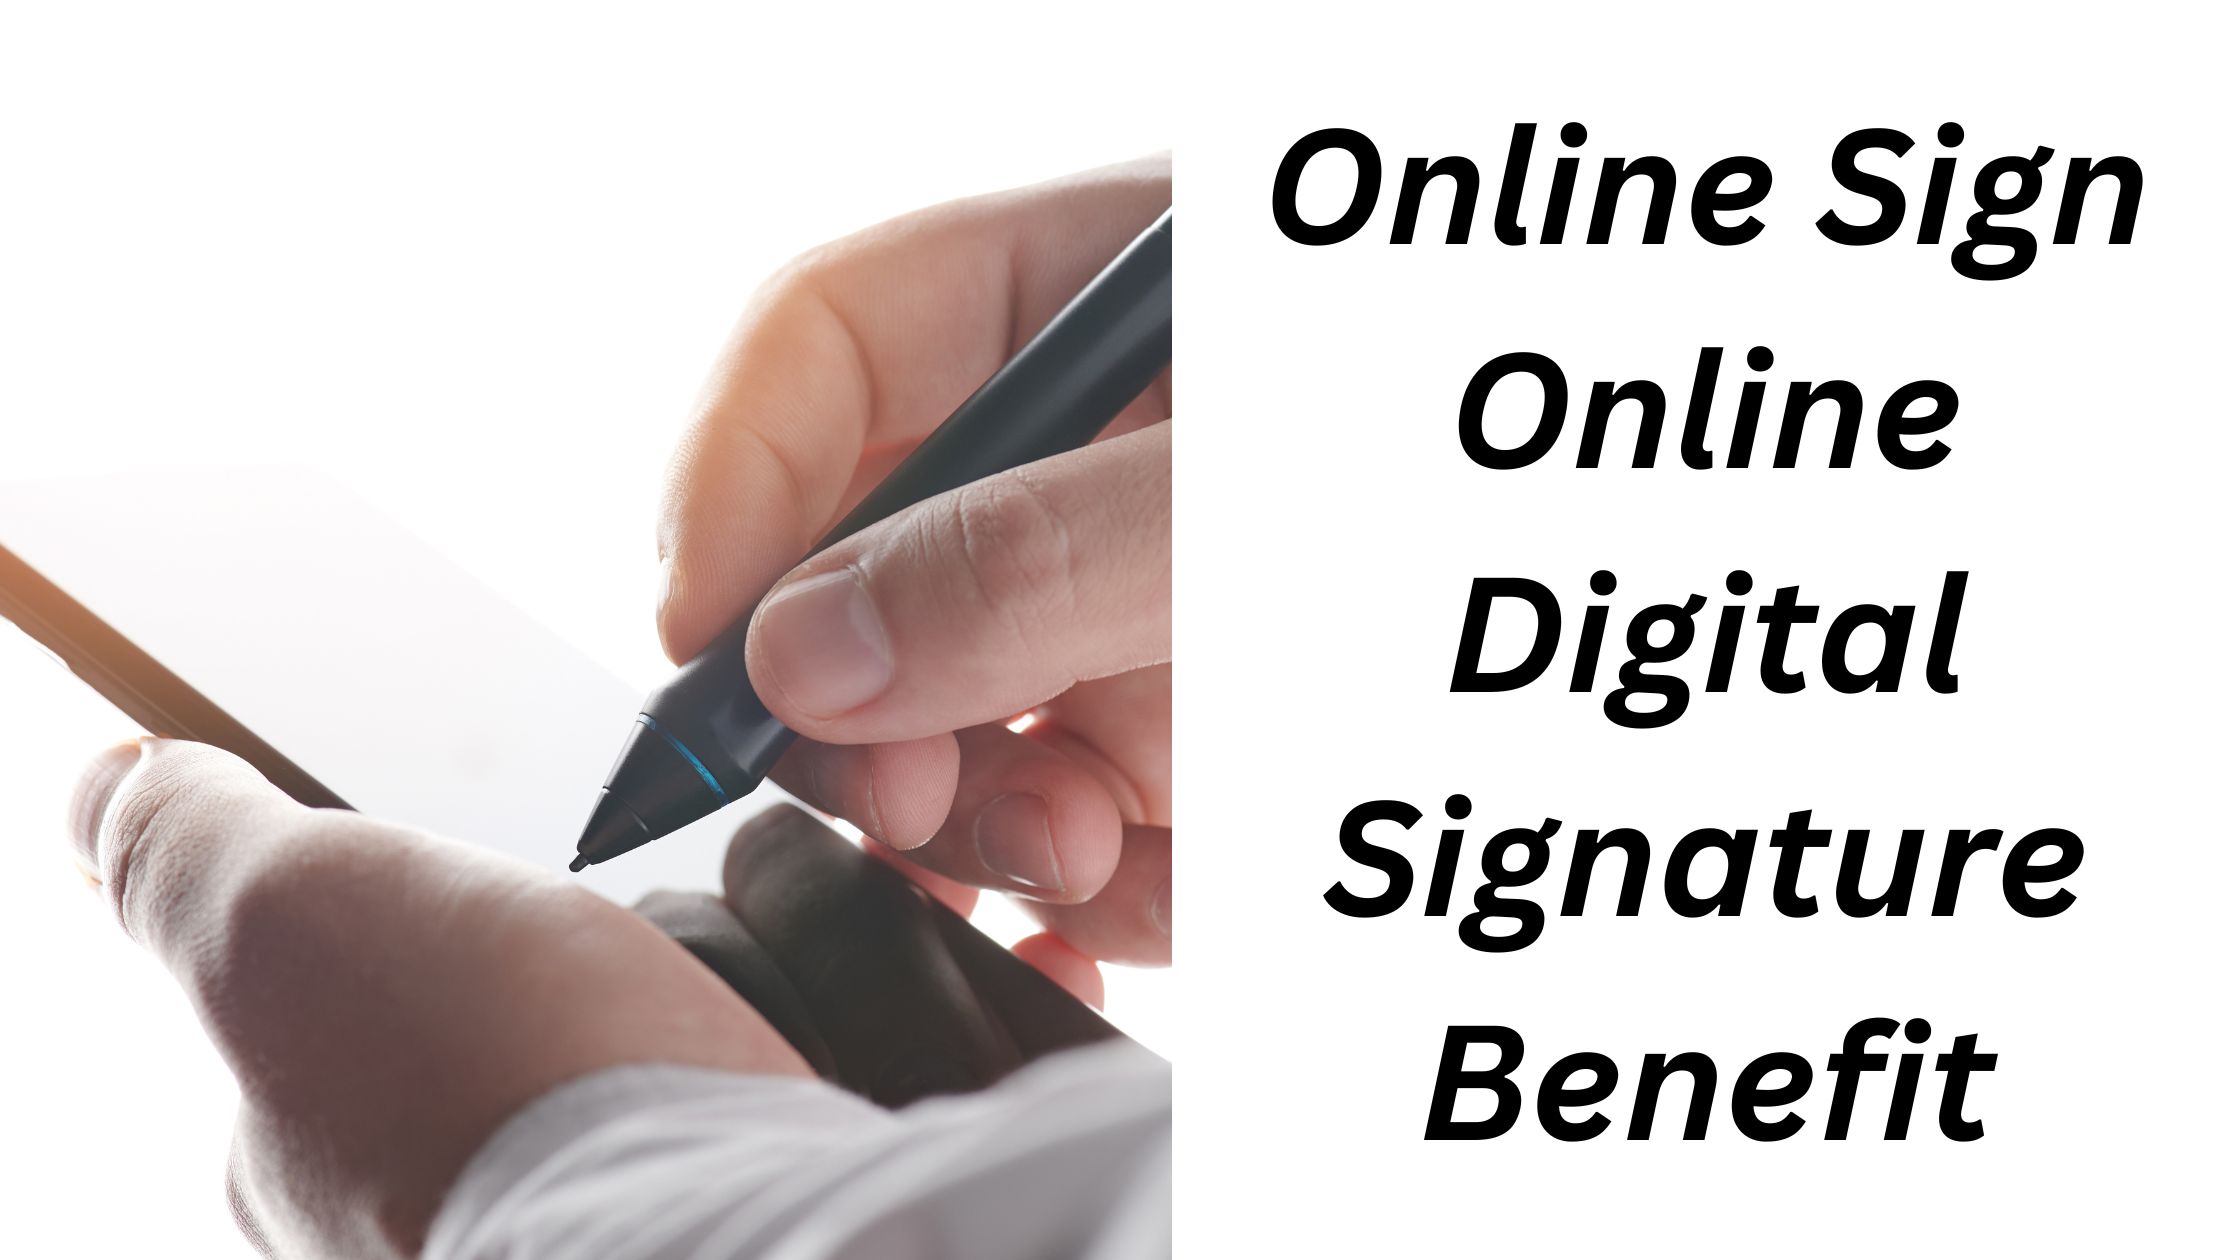 Online Sign Online Digital Signature Benefit